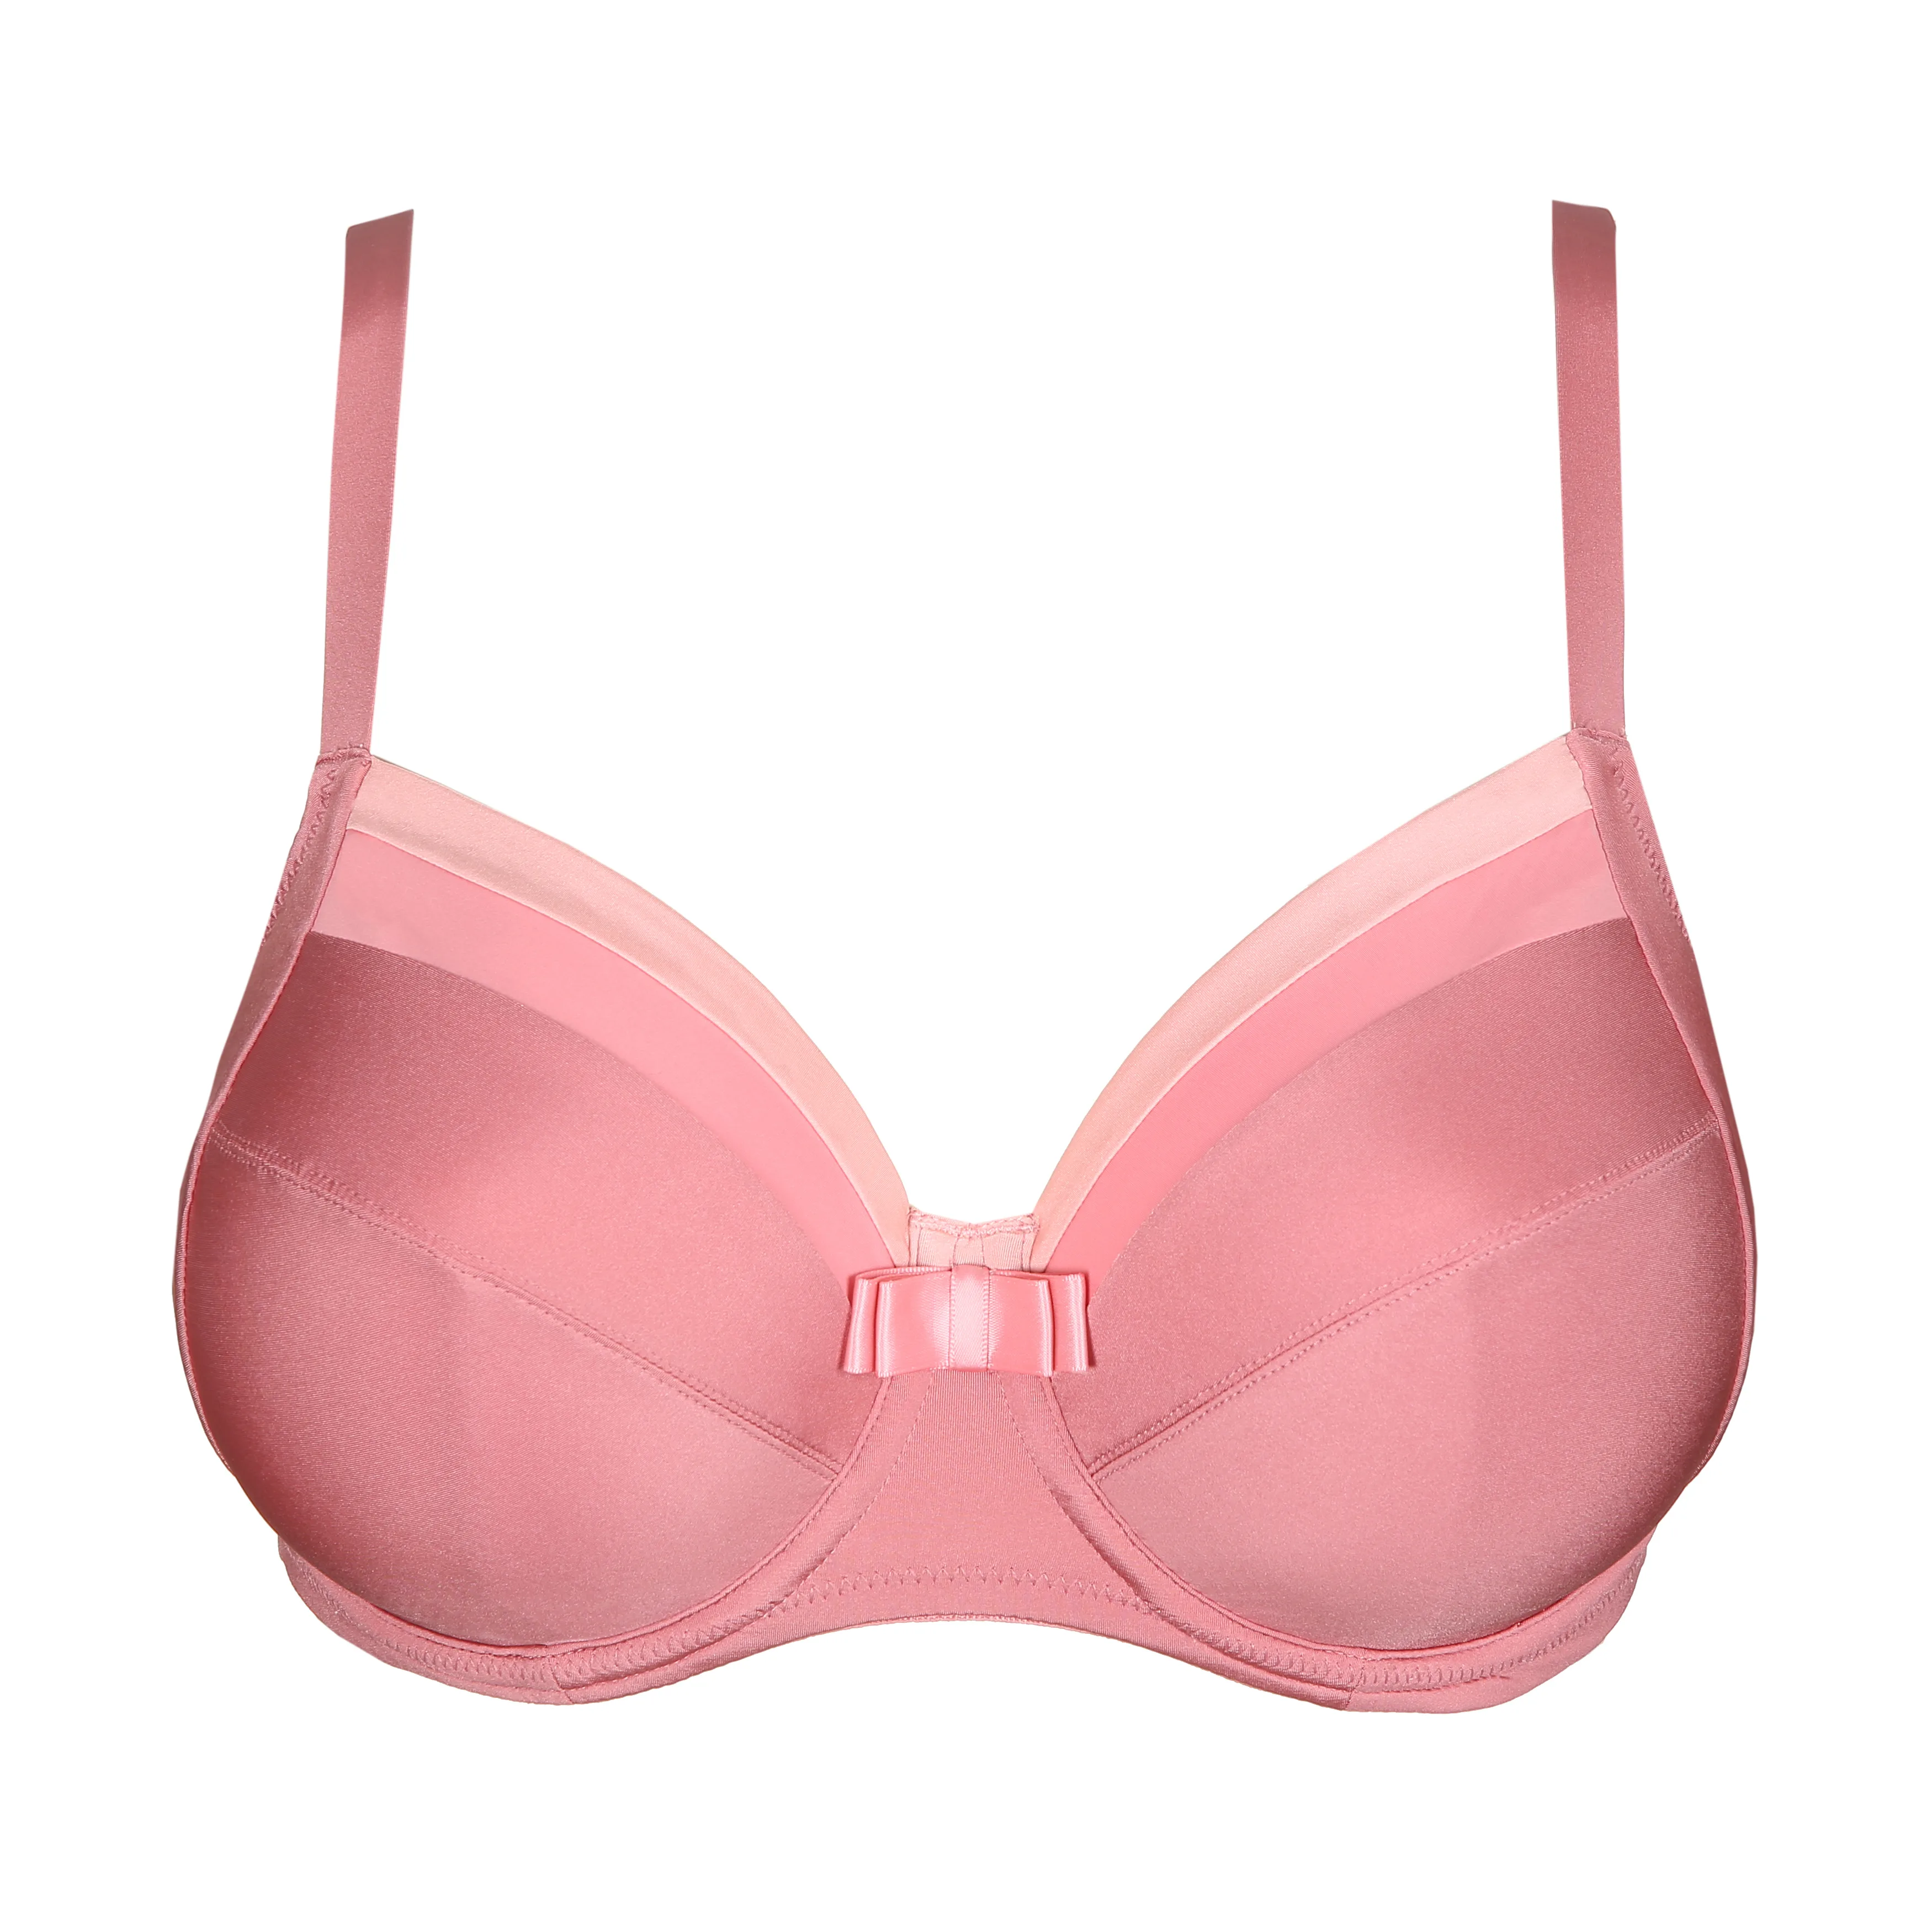 PrimaDonna TWIST LENOX HILL FULL CUP - Underwired bra - pomme d amour/pink  - Zalando.de